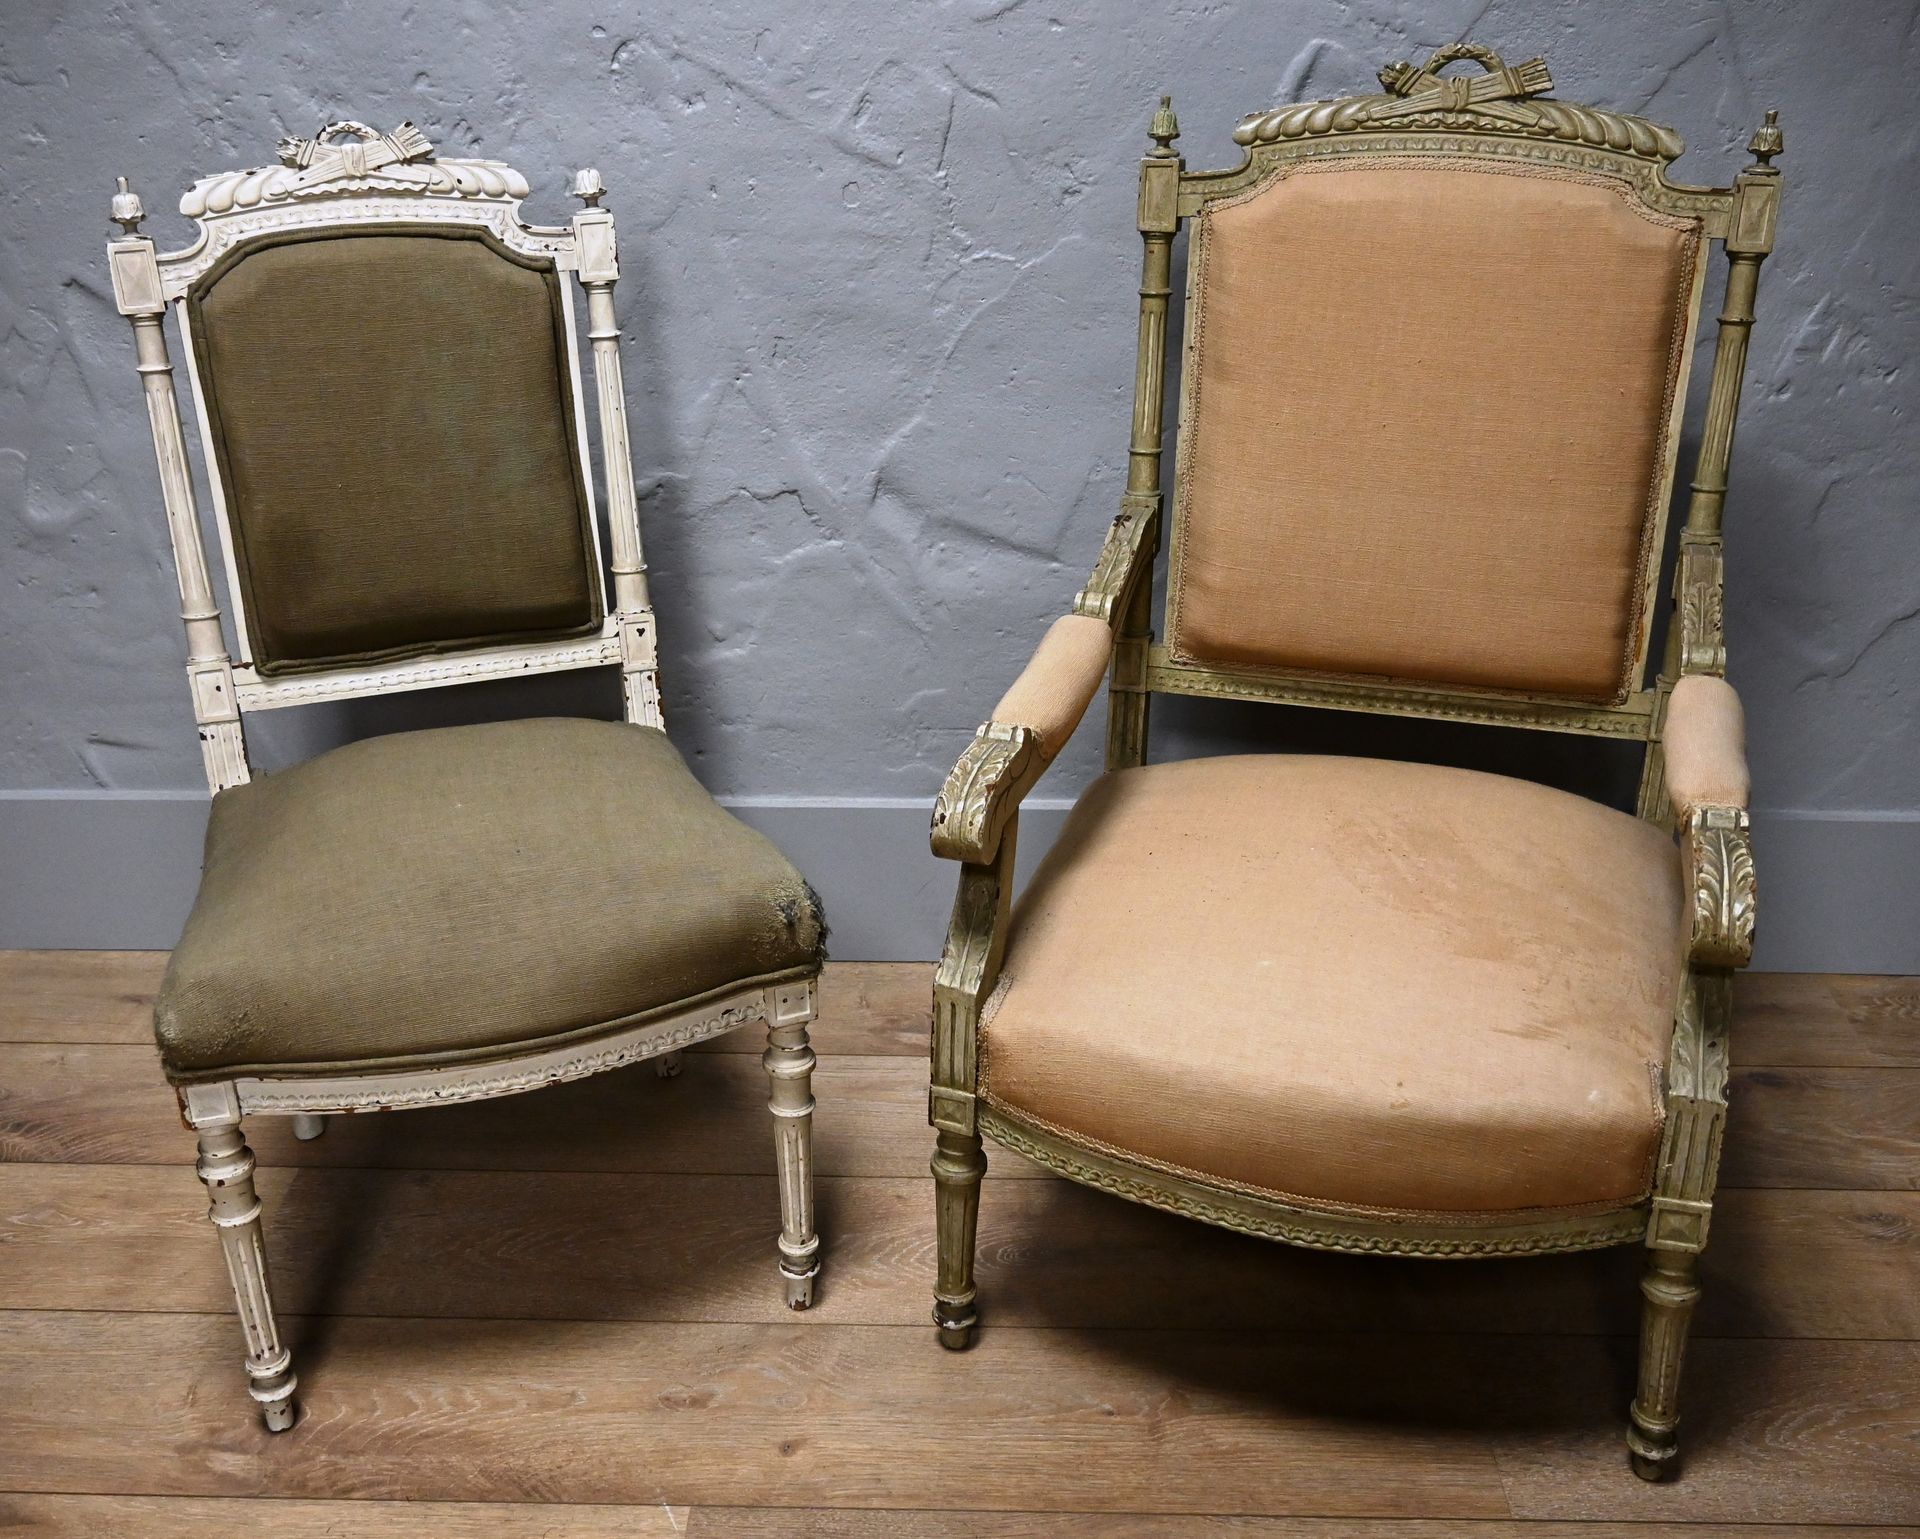 Partie de salon en bois peint 路易十六风格的奶油色油漆木制客厅套装。

由两把扶手椅和四把椅子组成。